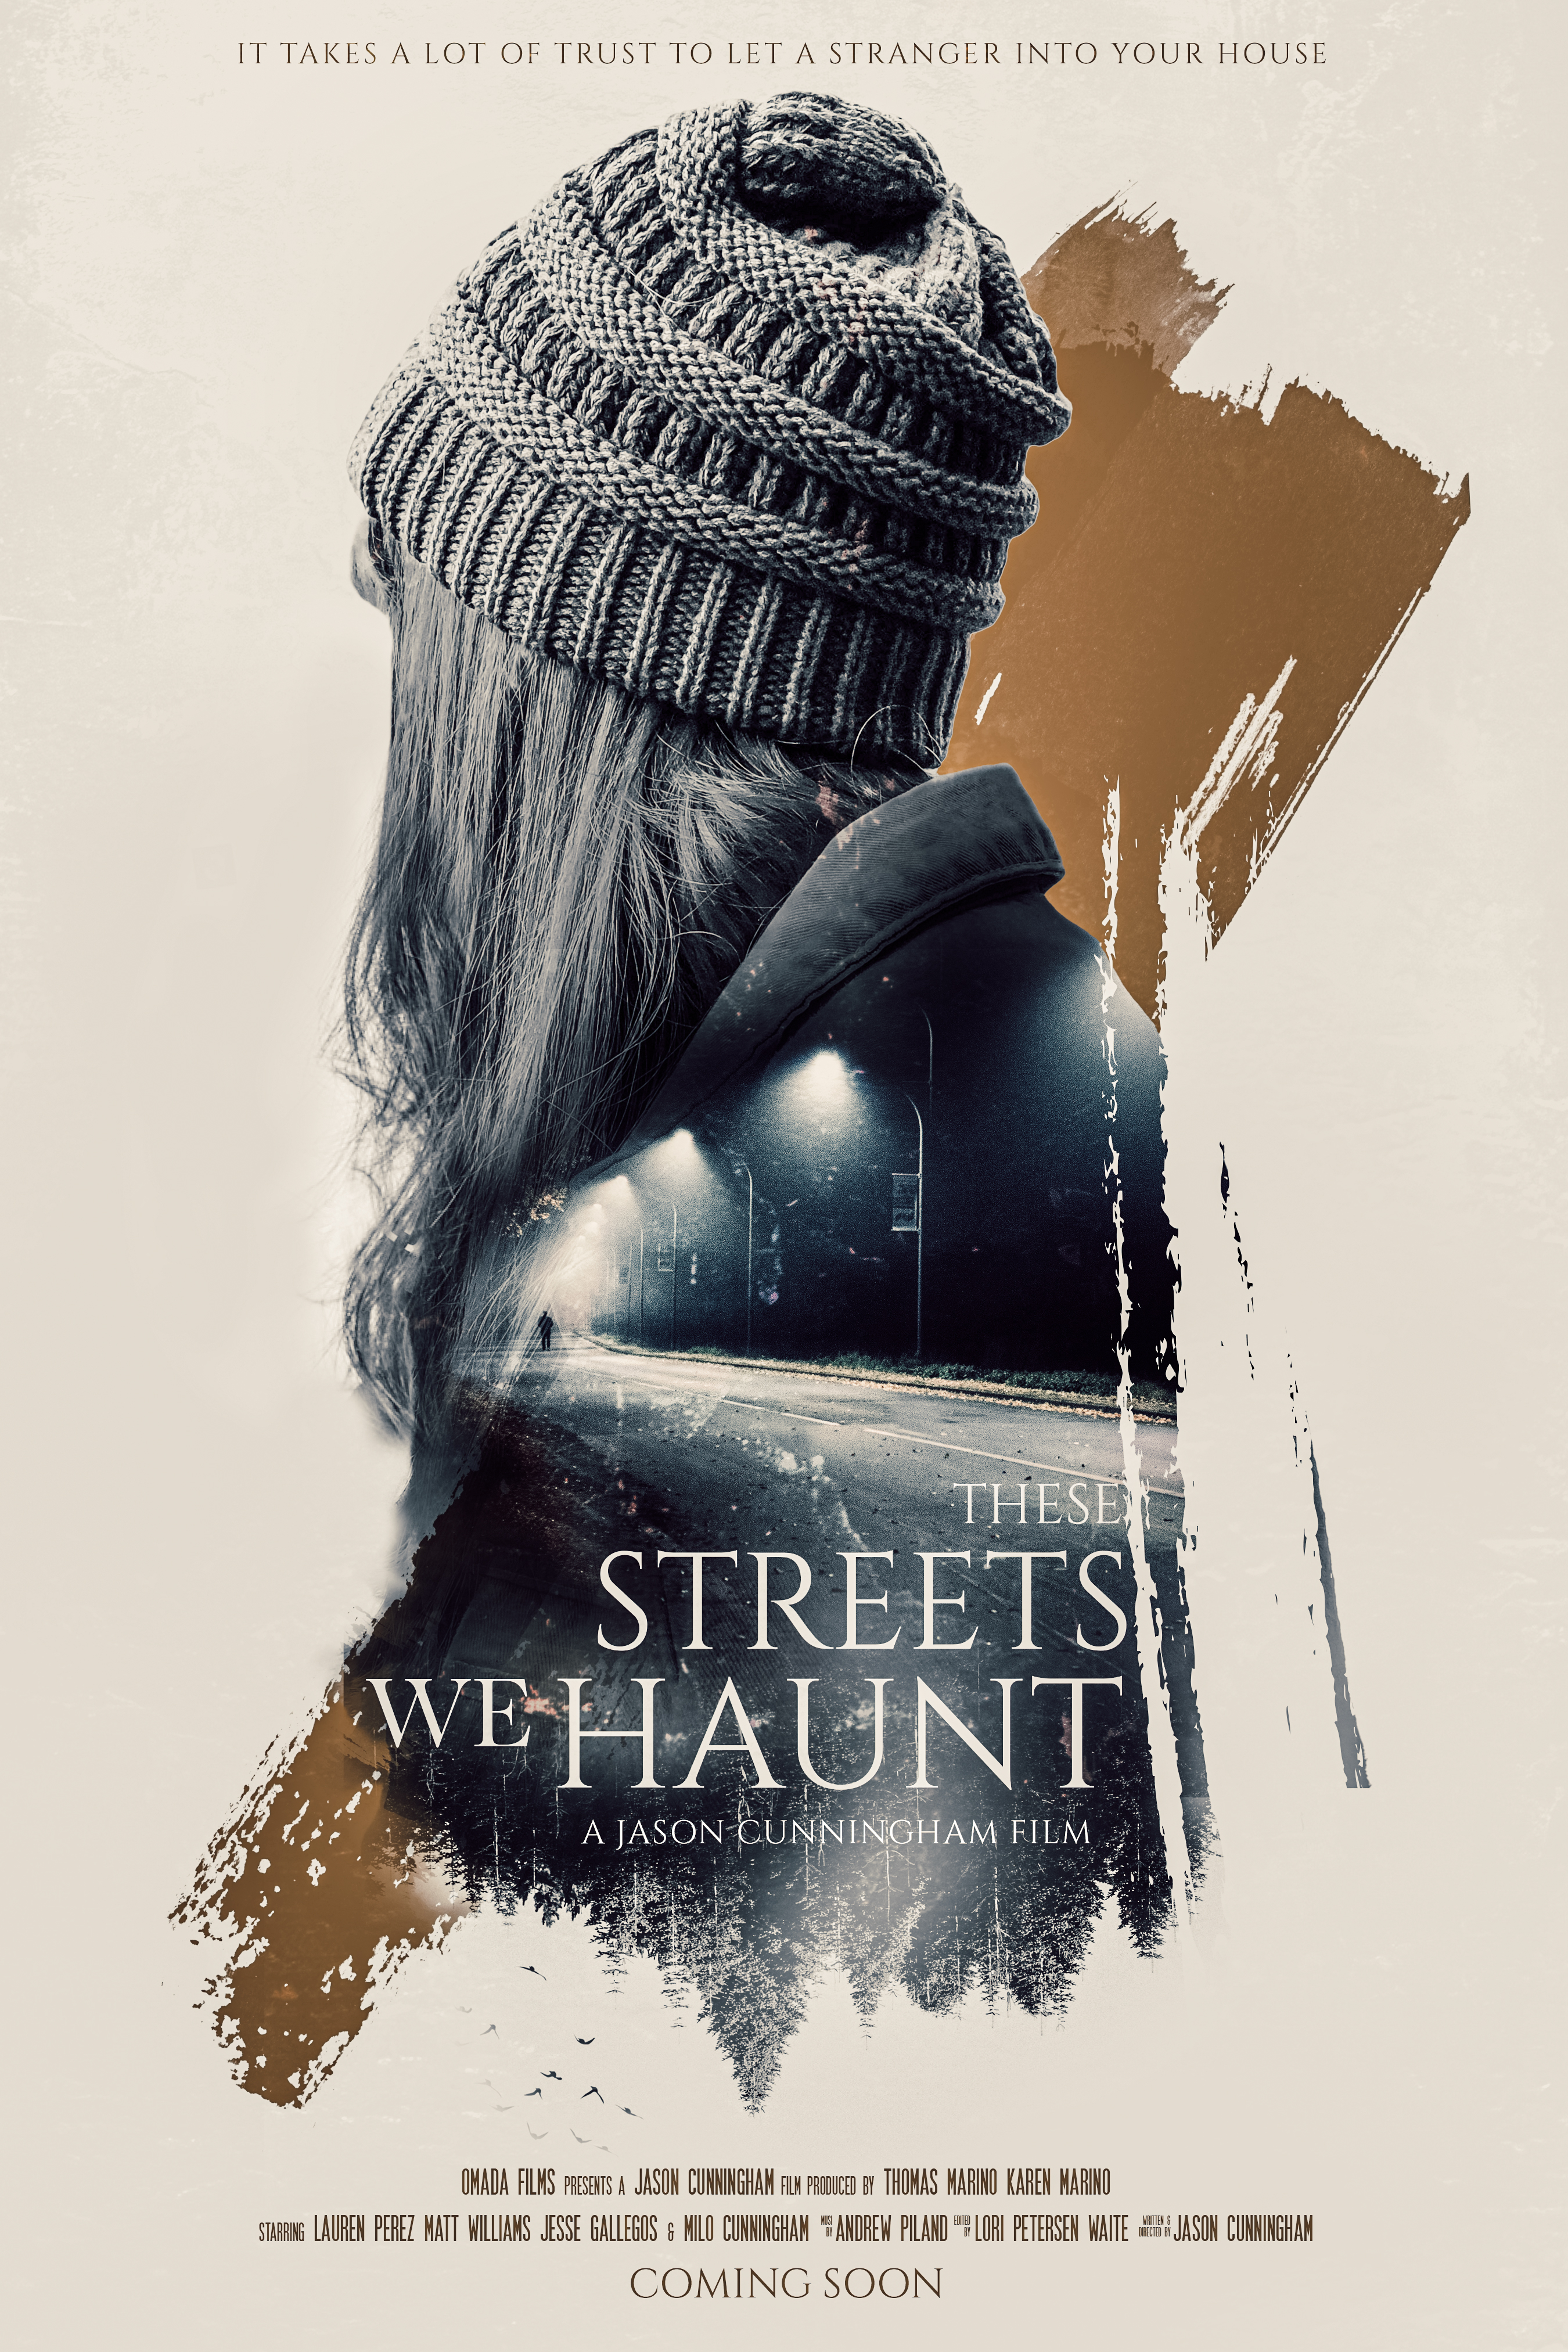 Nonton film These Streets We Haunt layarkaca21 indoxx1 ganool online streaming terbaru